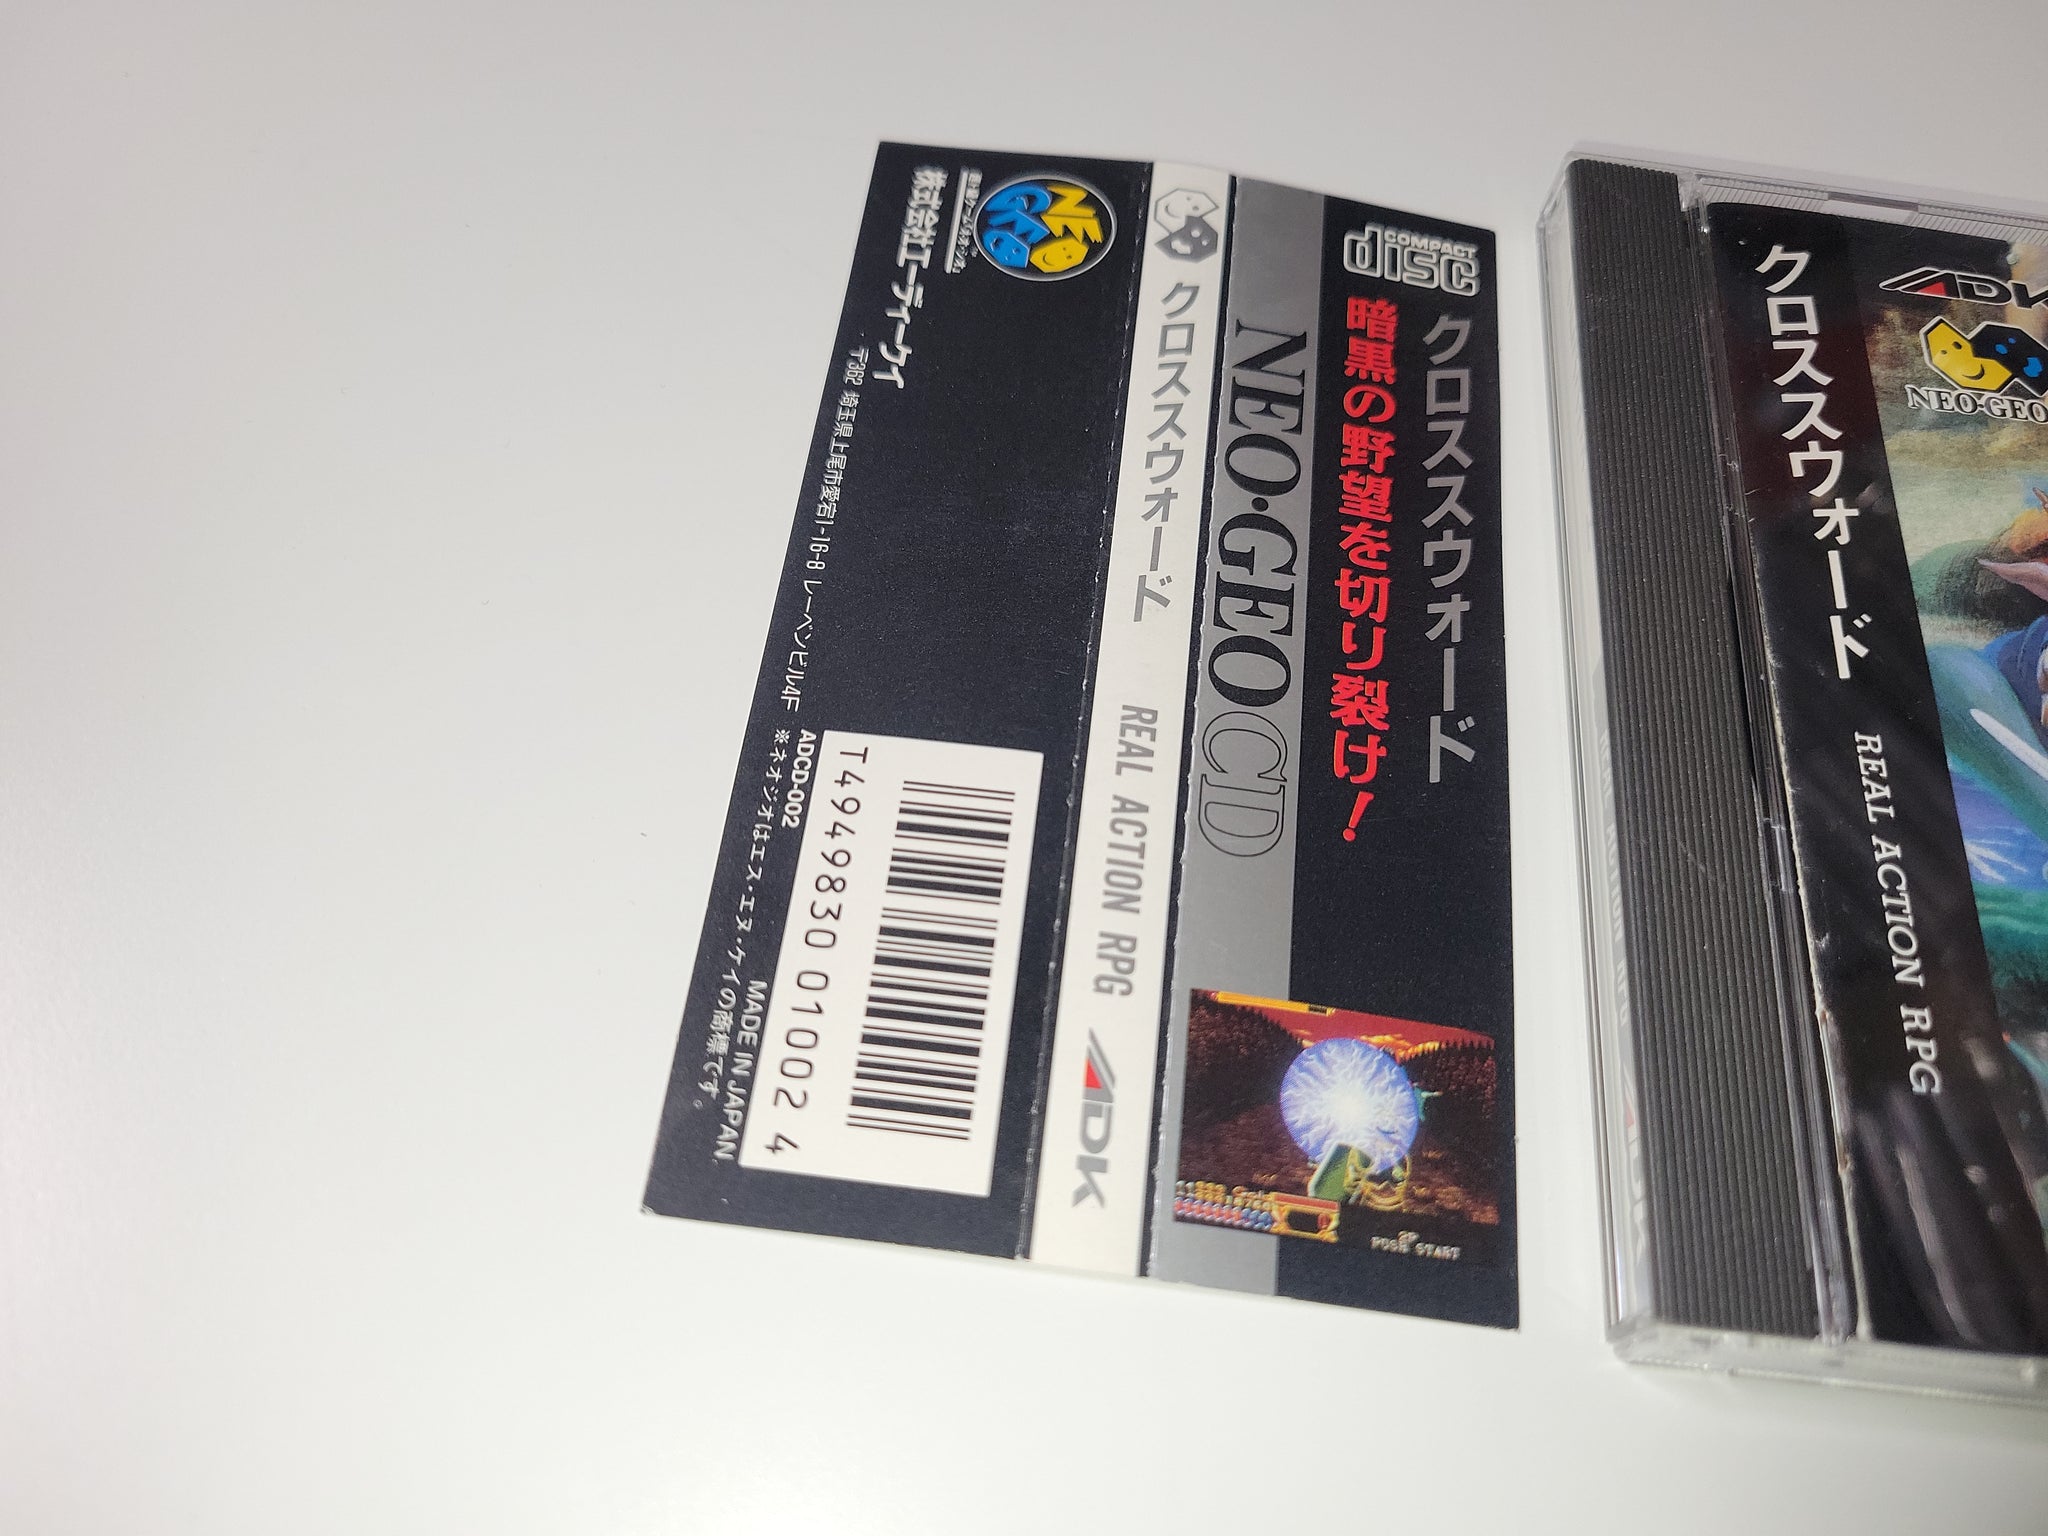 Buy Crossed Swords SNK Neo Geo CD Video Games on the Store